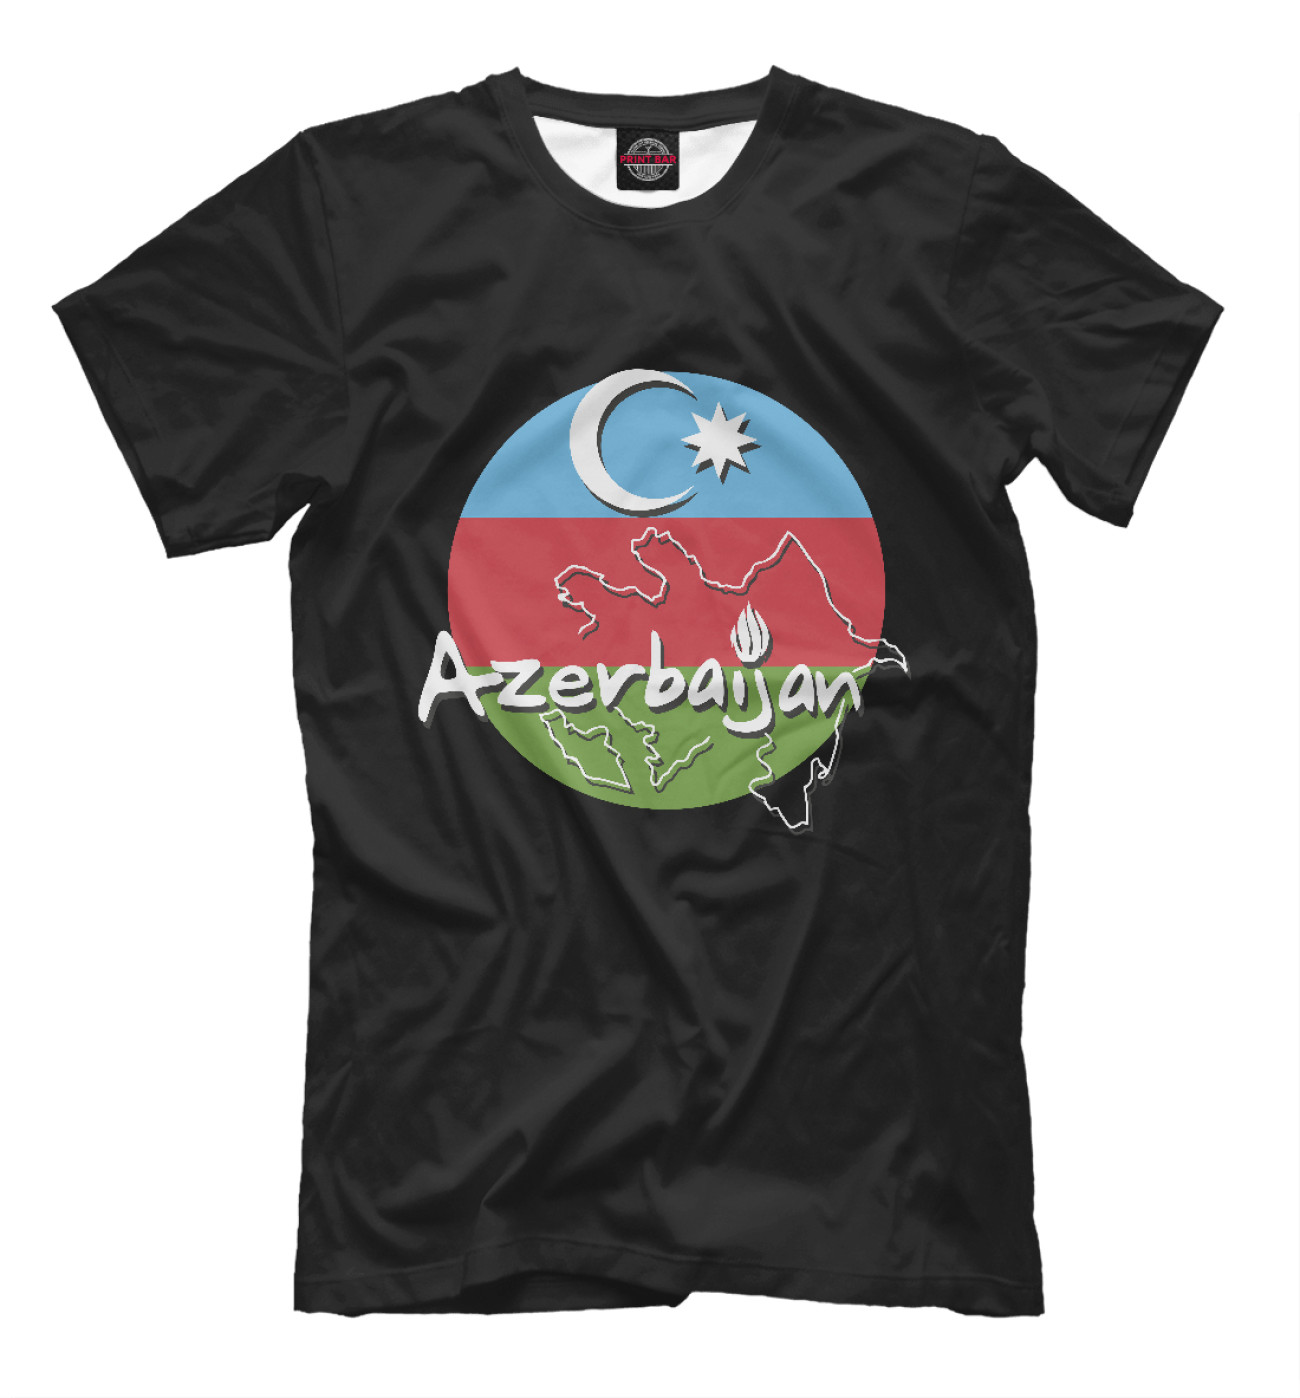 Мужская Футболка Азербайджан, артикул: AZR-597380-fut-2